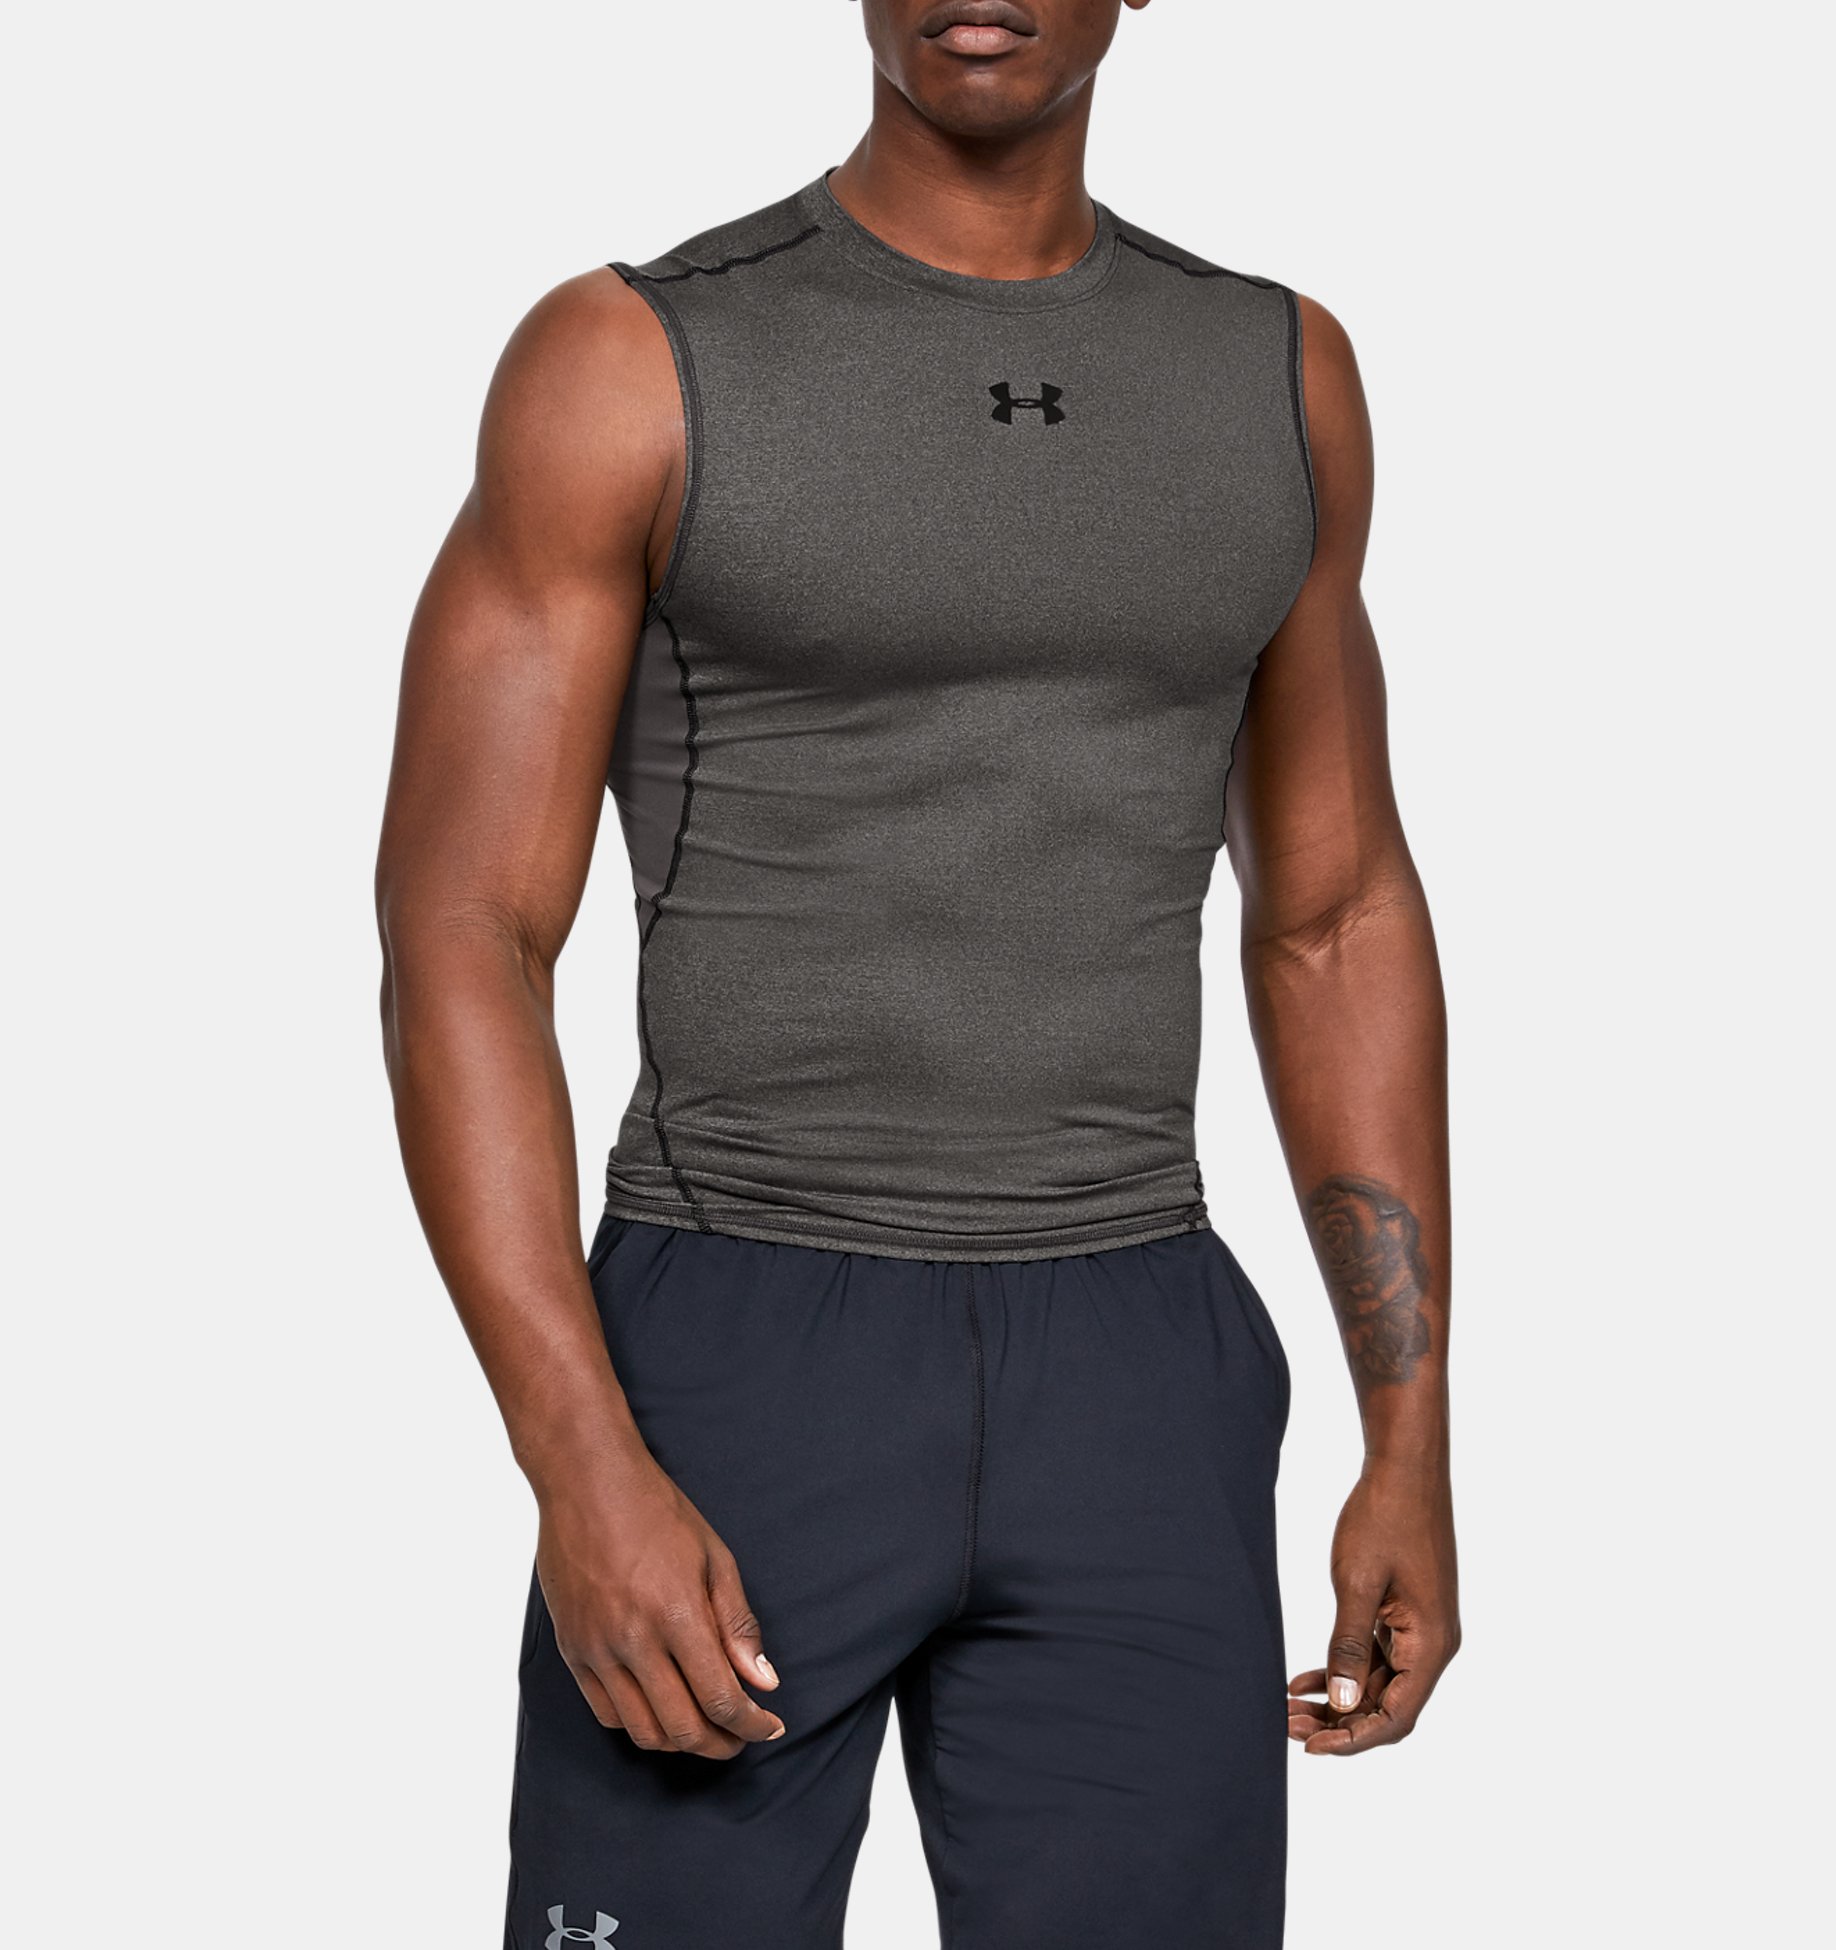 Under Armour UA HeatGear Red Sports Top Gym Training Sleeveless Compression Vest 